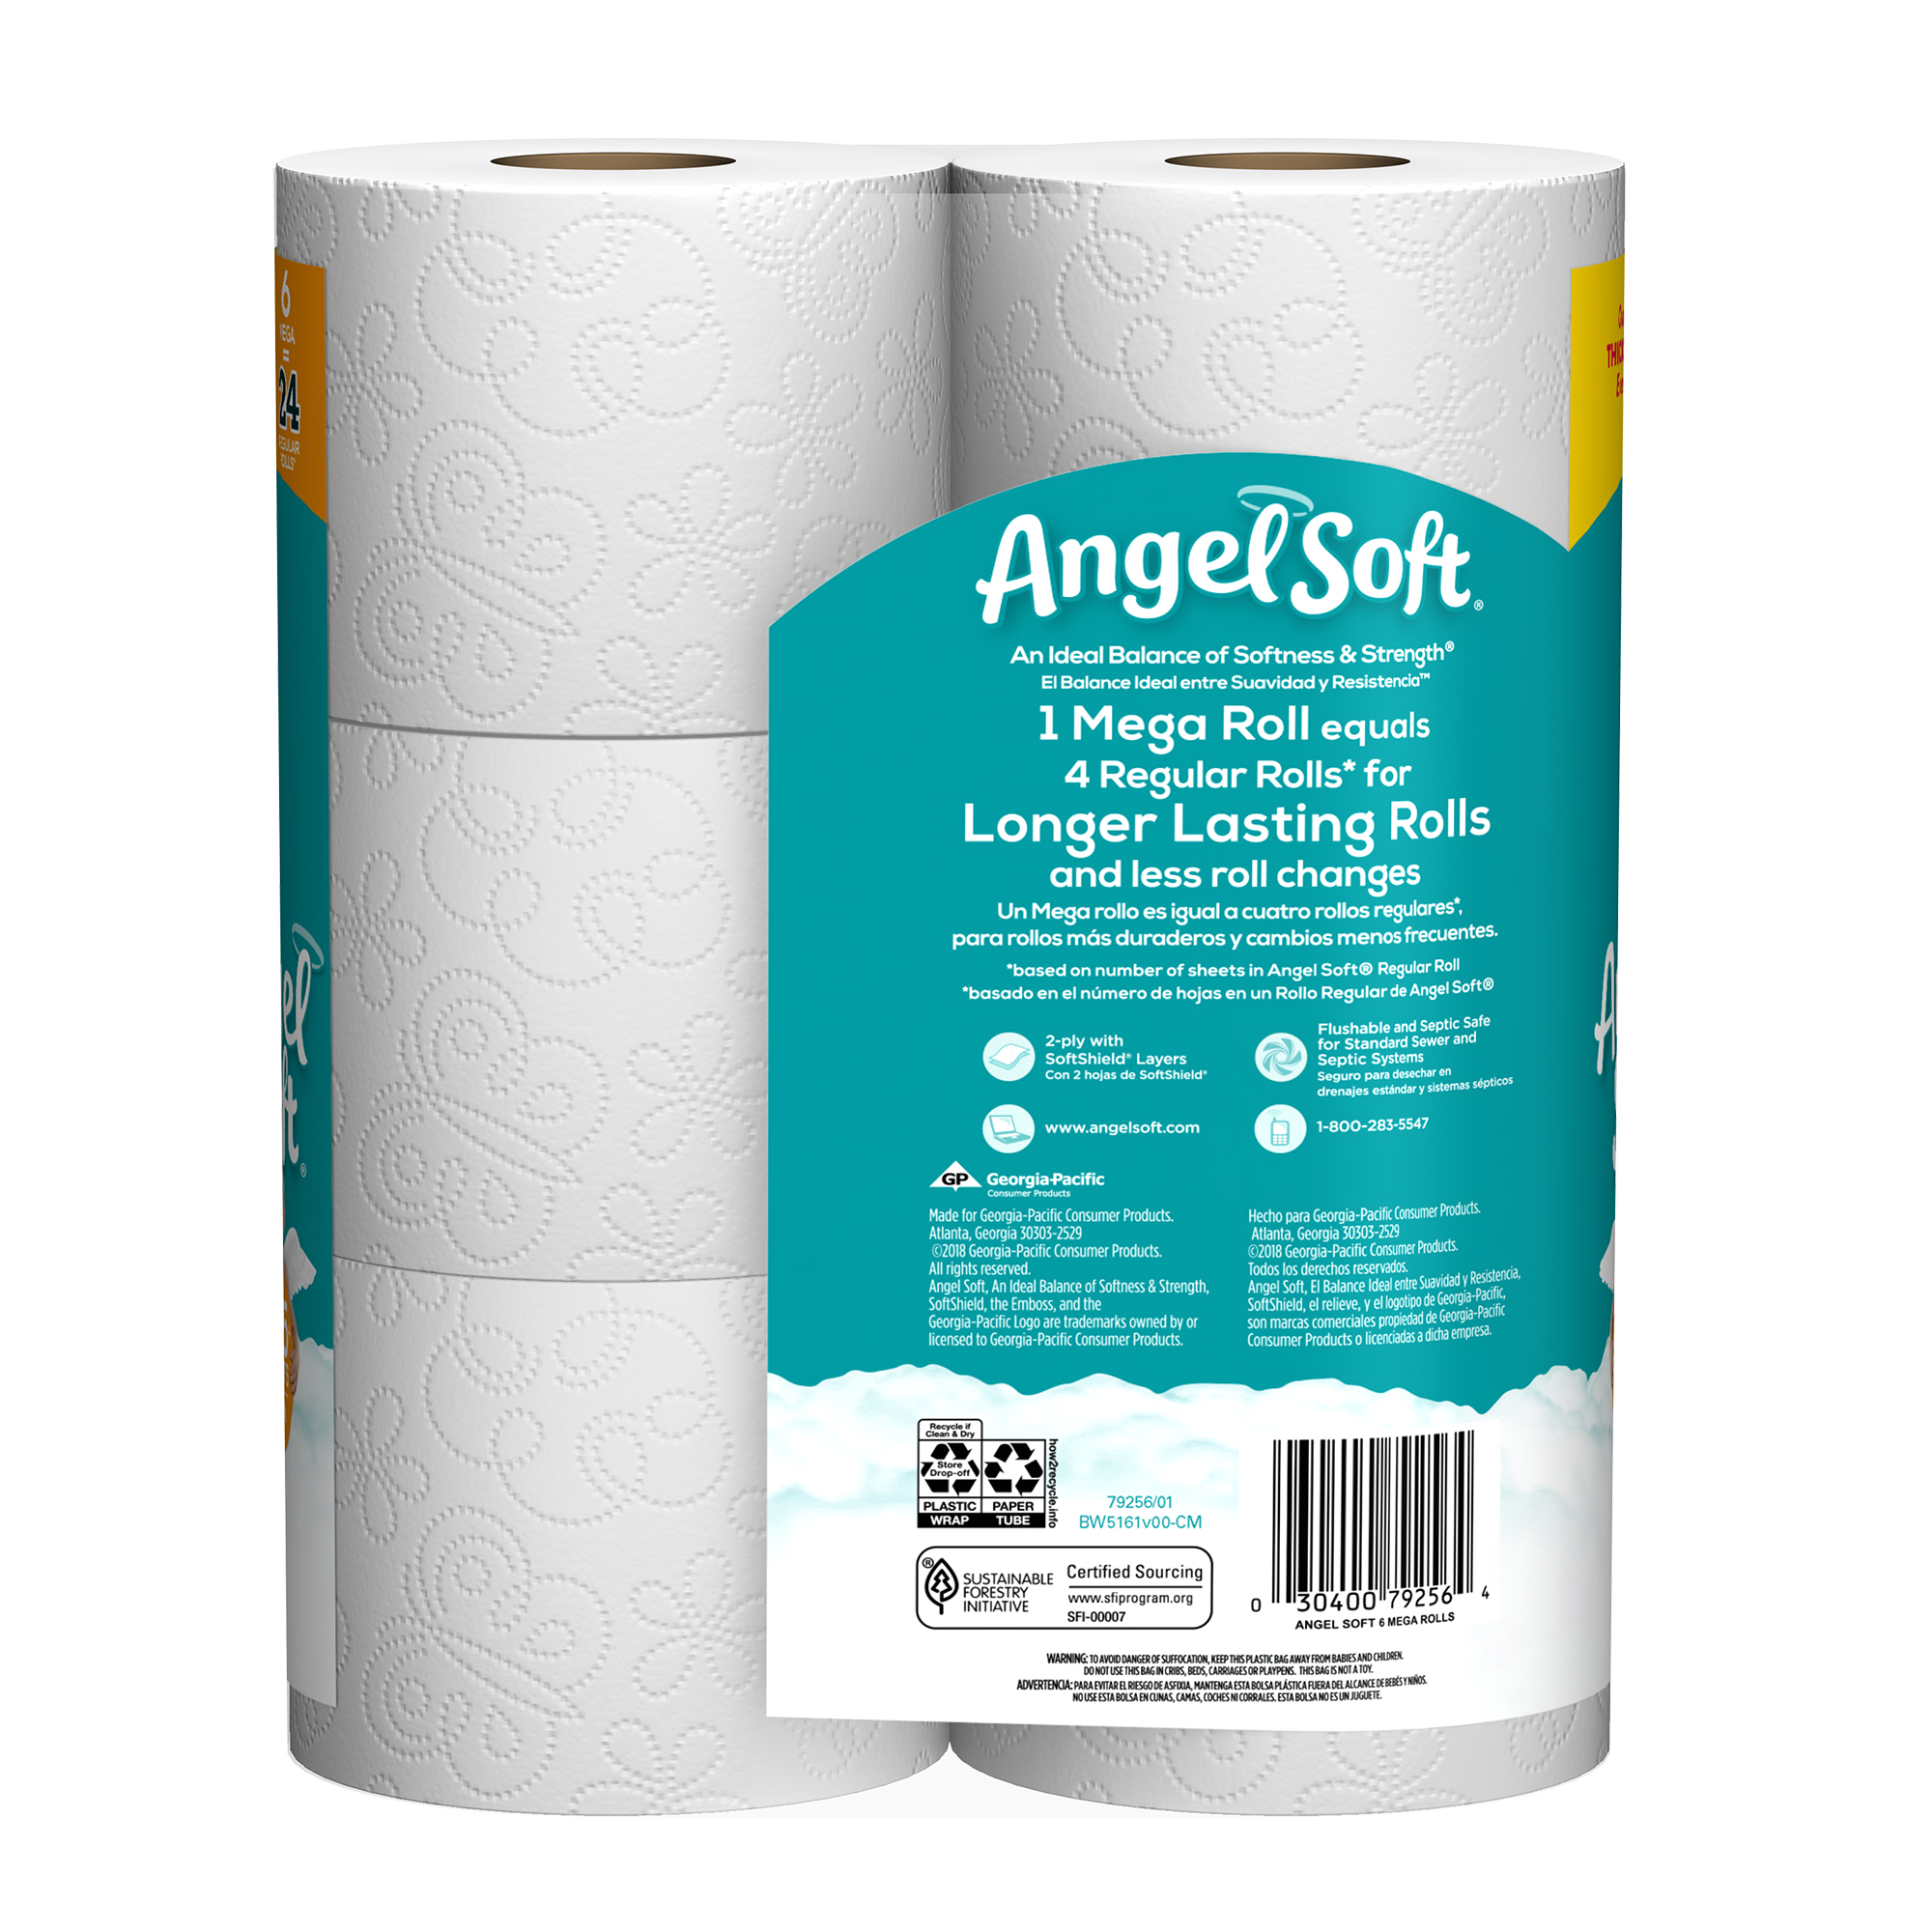 Angel Soft Toilet Paper, 6 Mega Rolls = 24 Regular Rolls, 2-Ply Bath Tissue - image 14 of 14